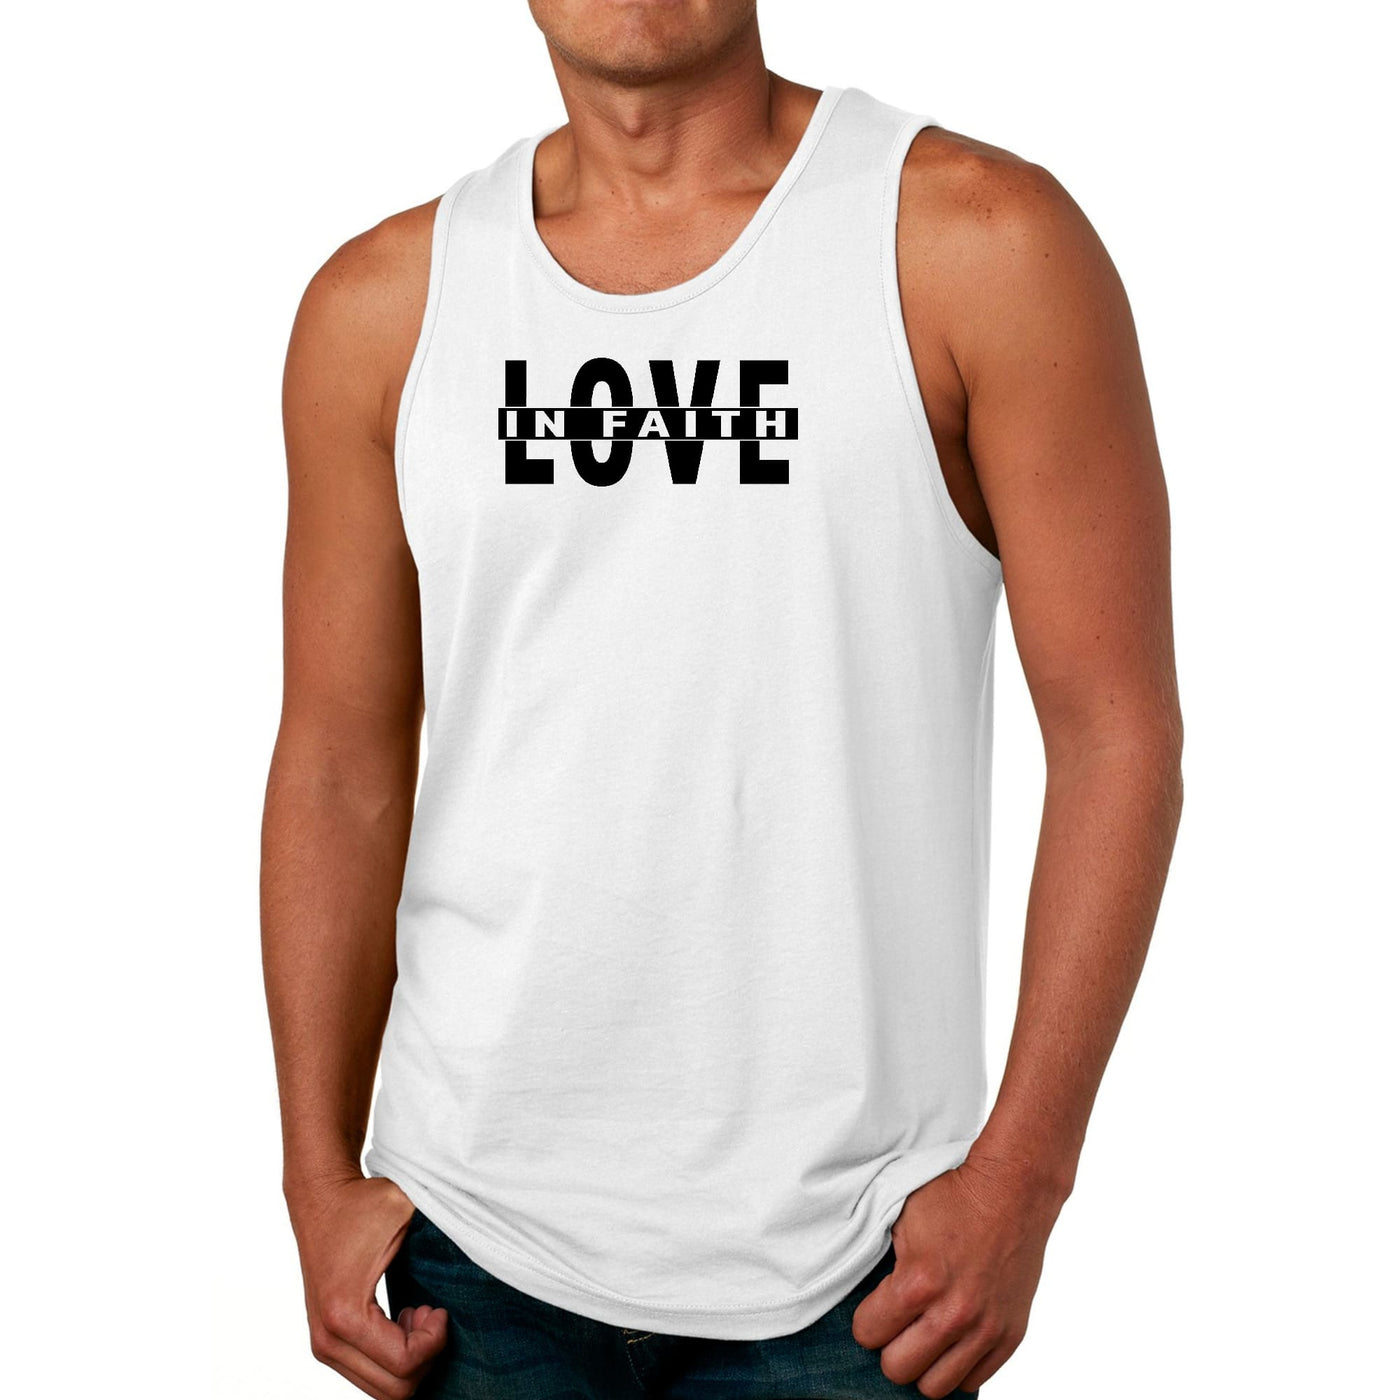 Mens Fitness Tank Top Graphic T-shirt Love In Faith Black Illustration - Mens